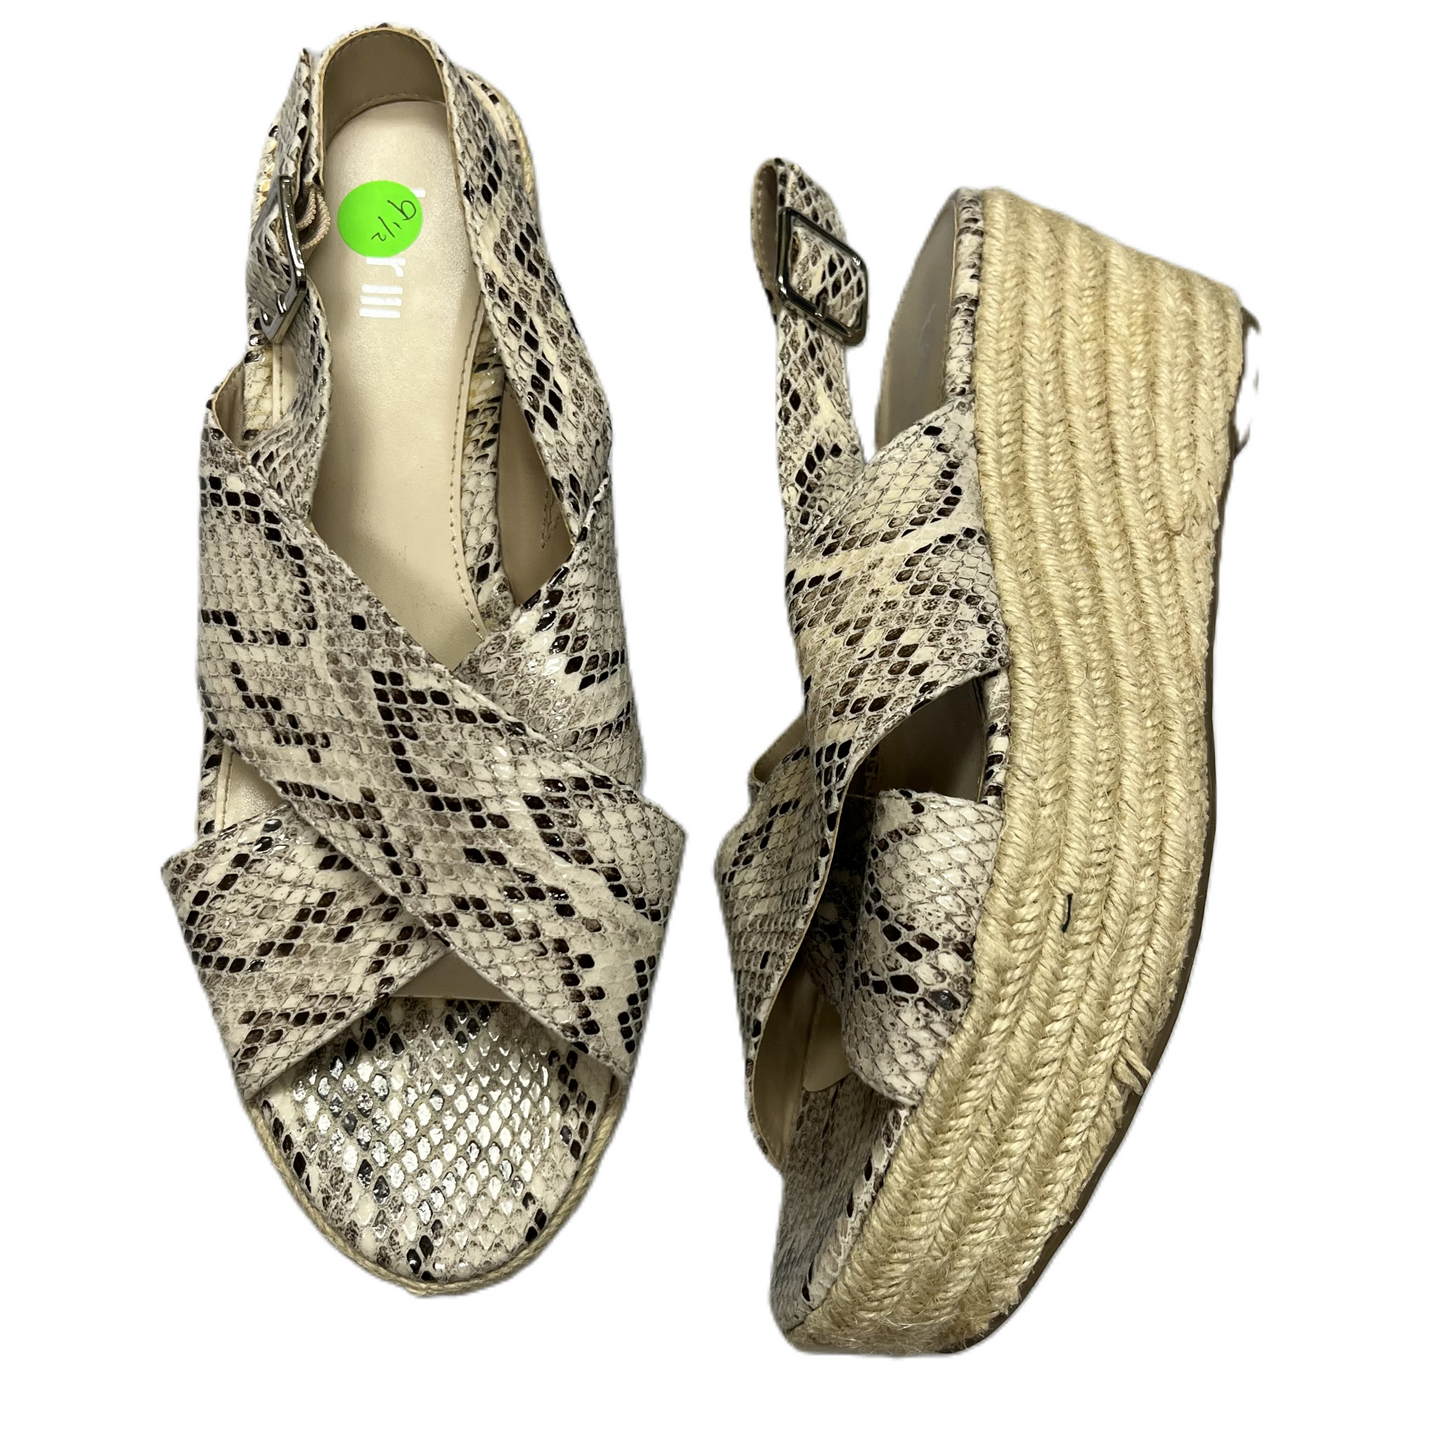 Snakeskin Print Sandals Heels Platform By Bar Iii, Size: 9.5